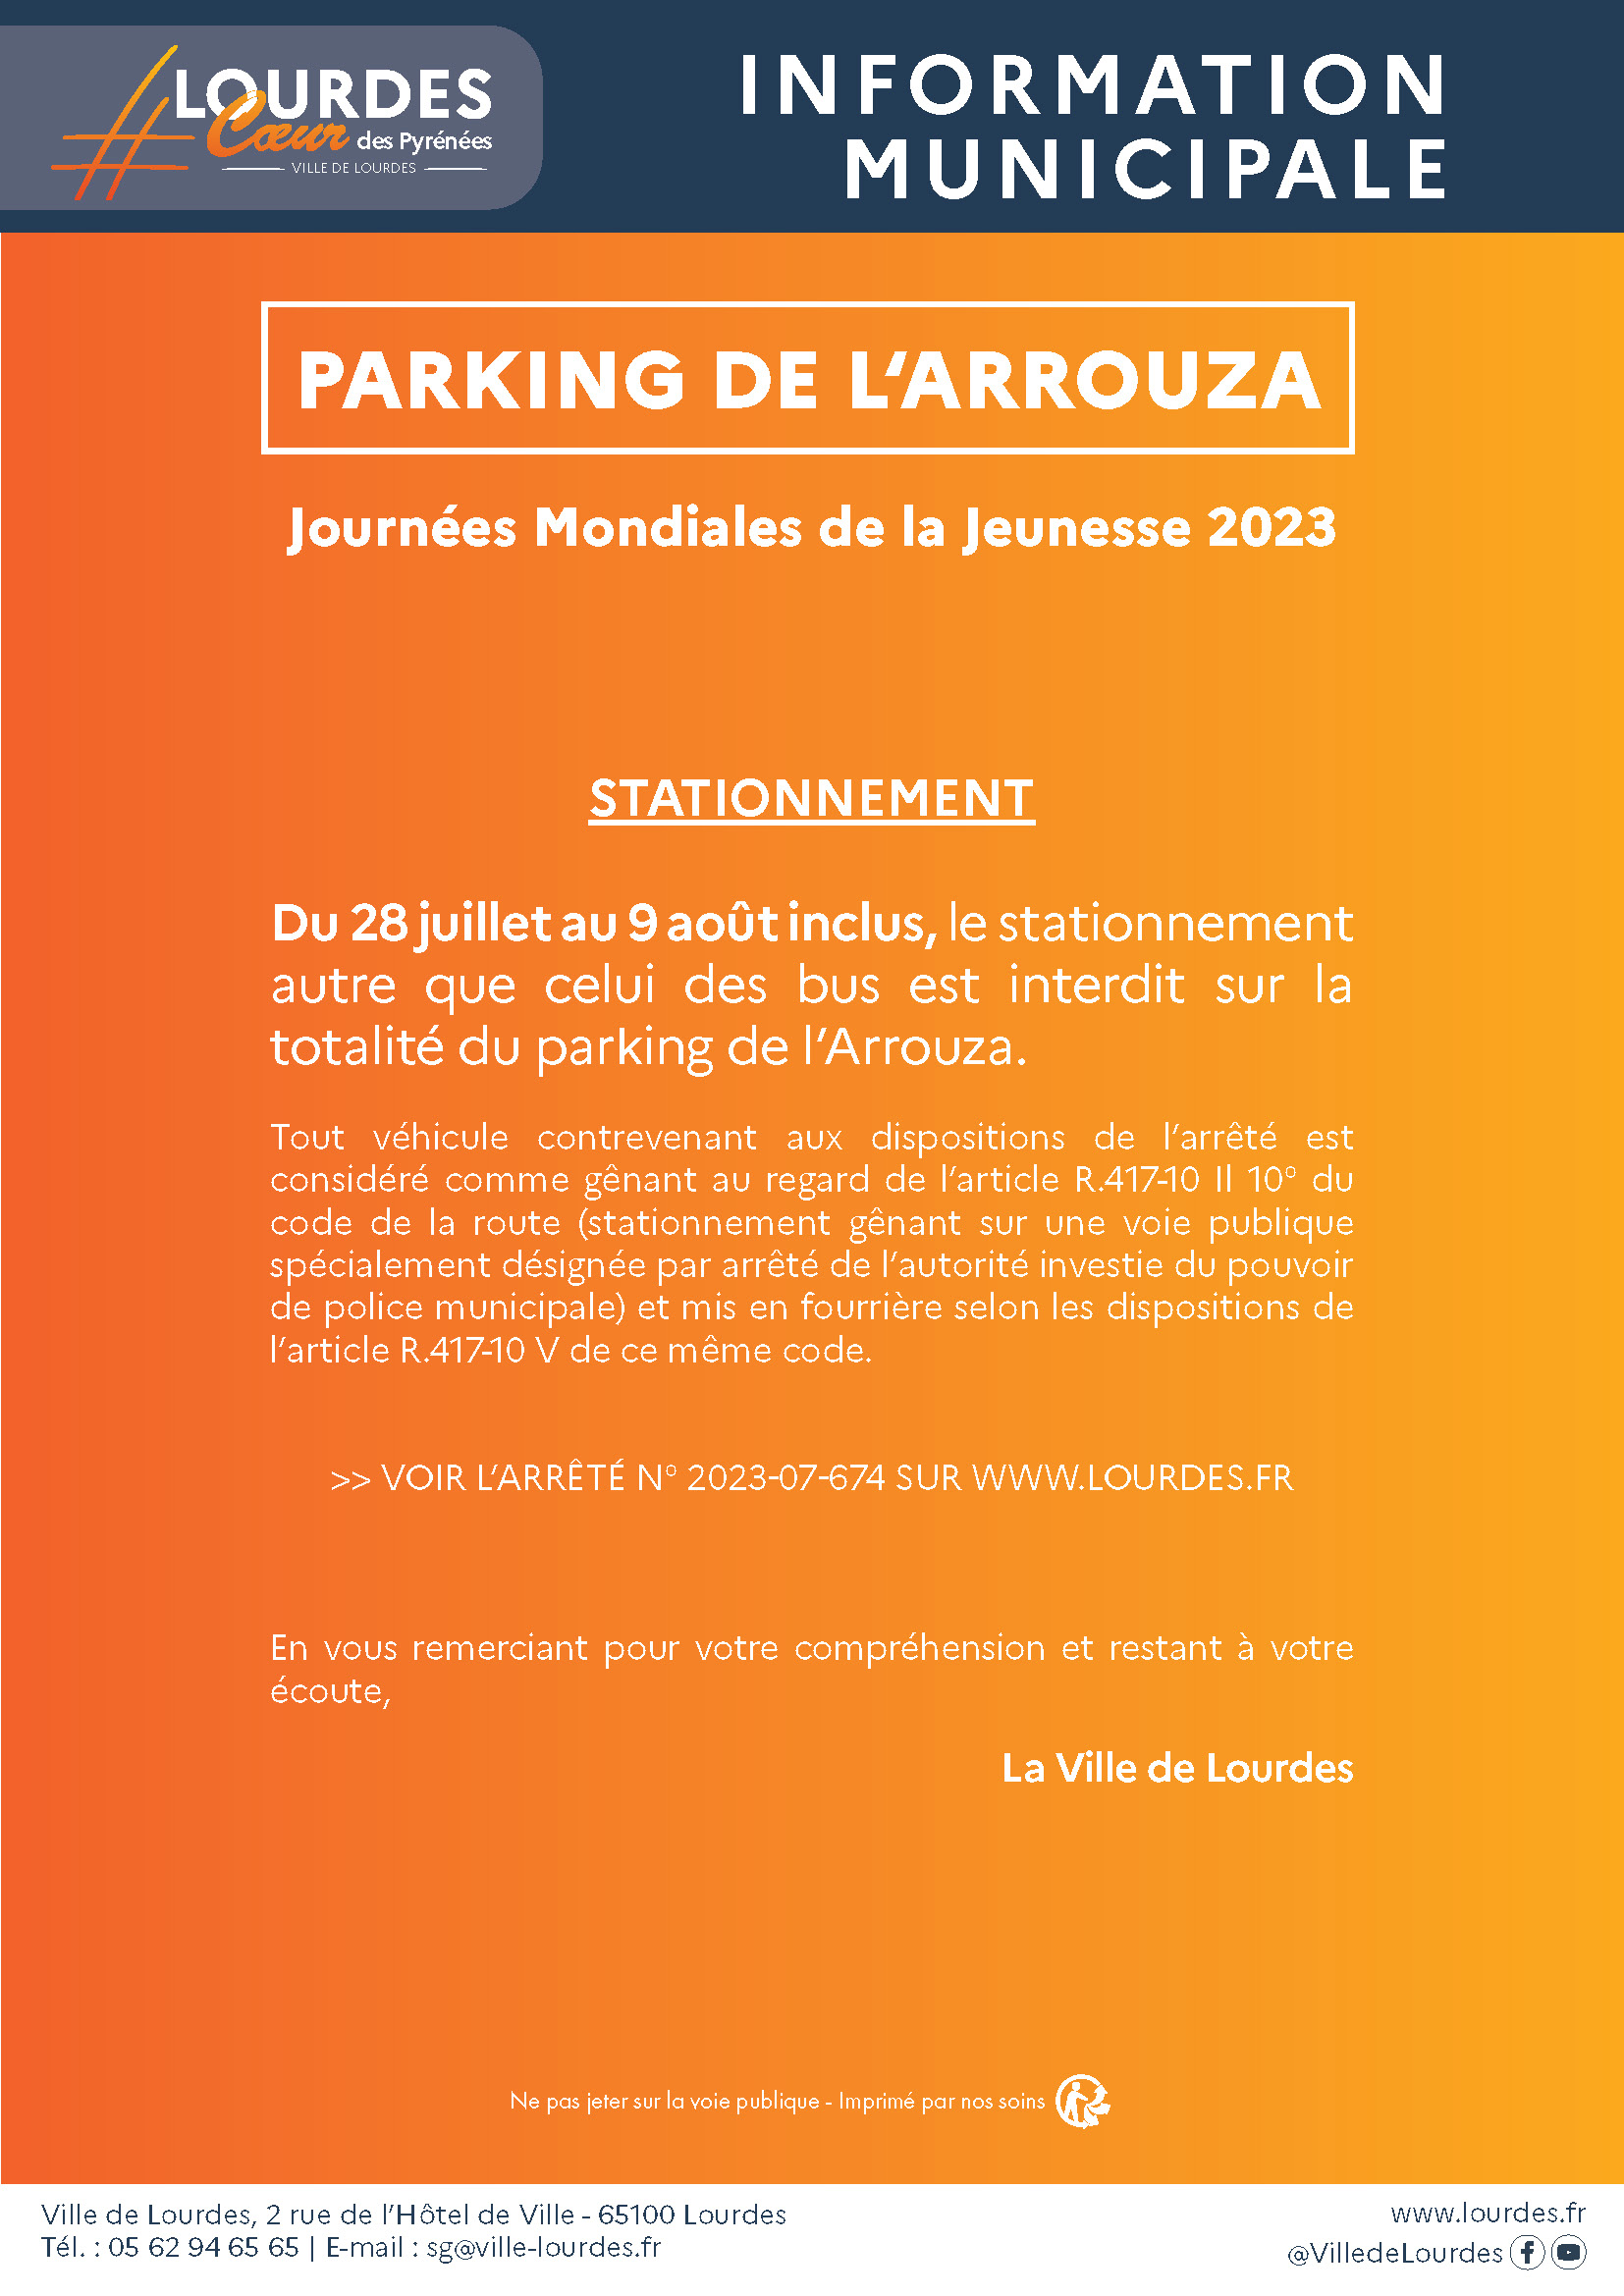 info municipale parking arrouza JMJ